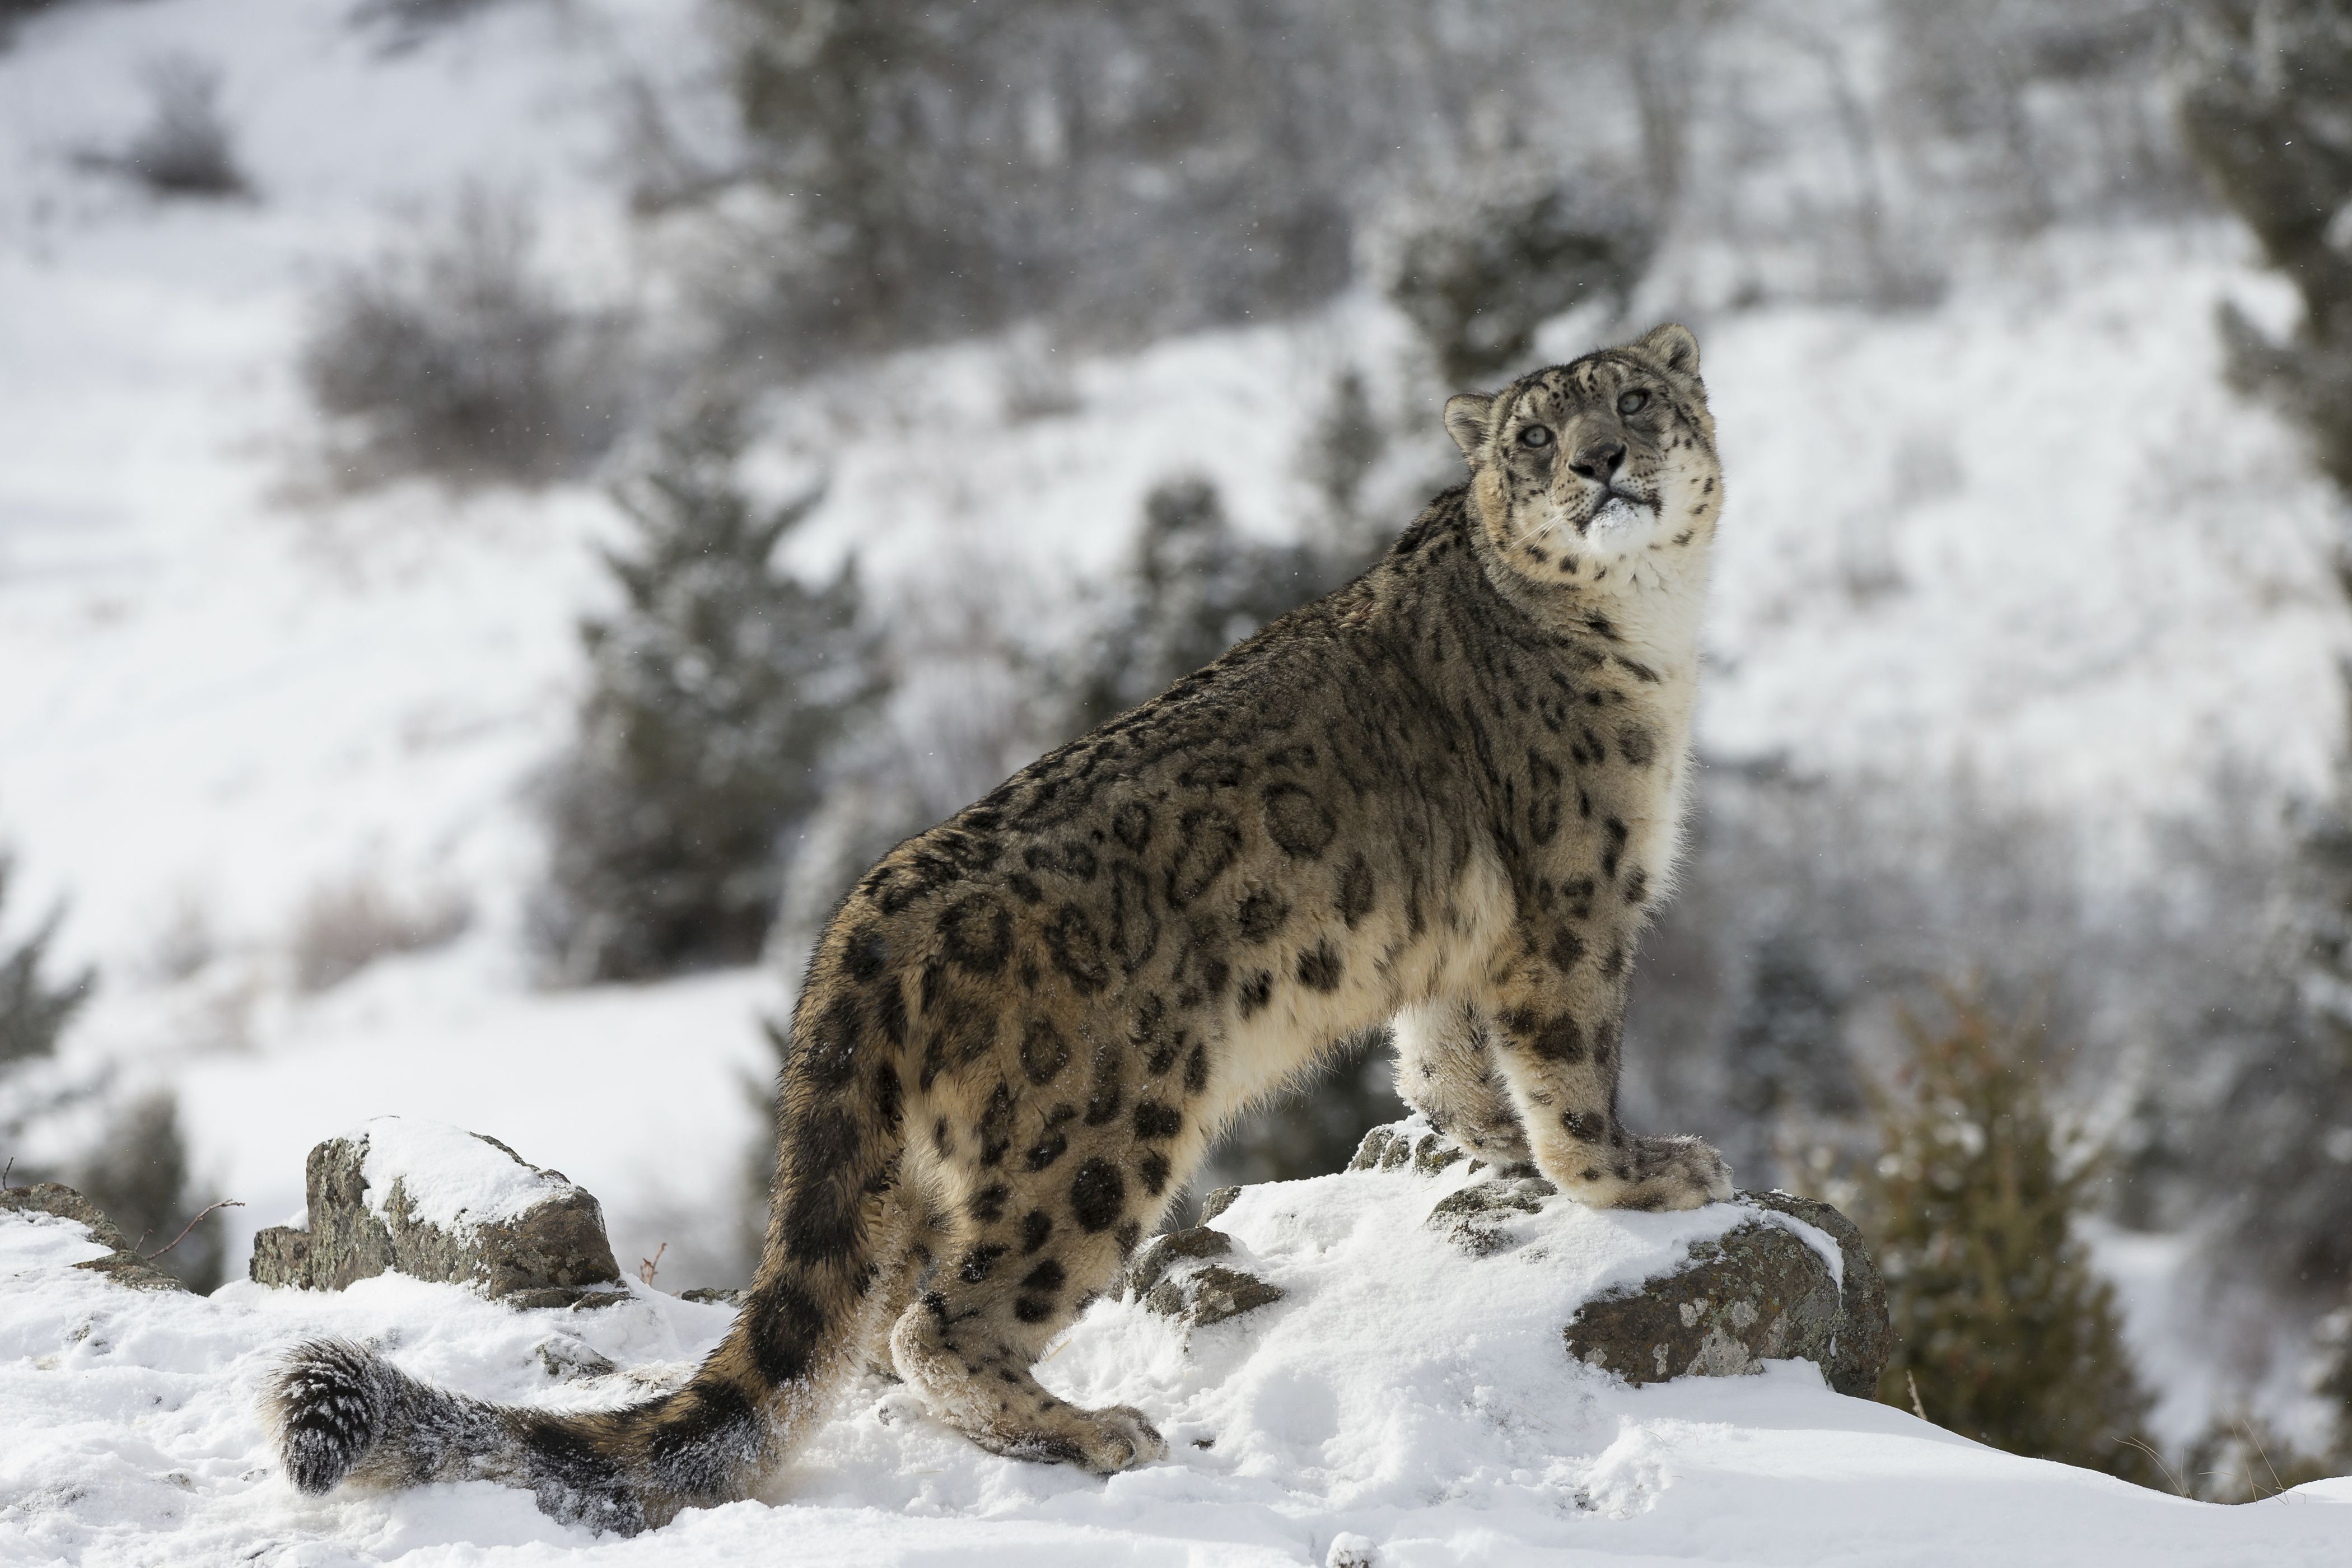 Snow leopard in winter scene